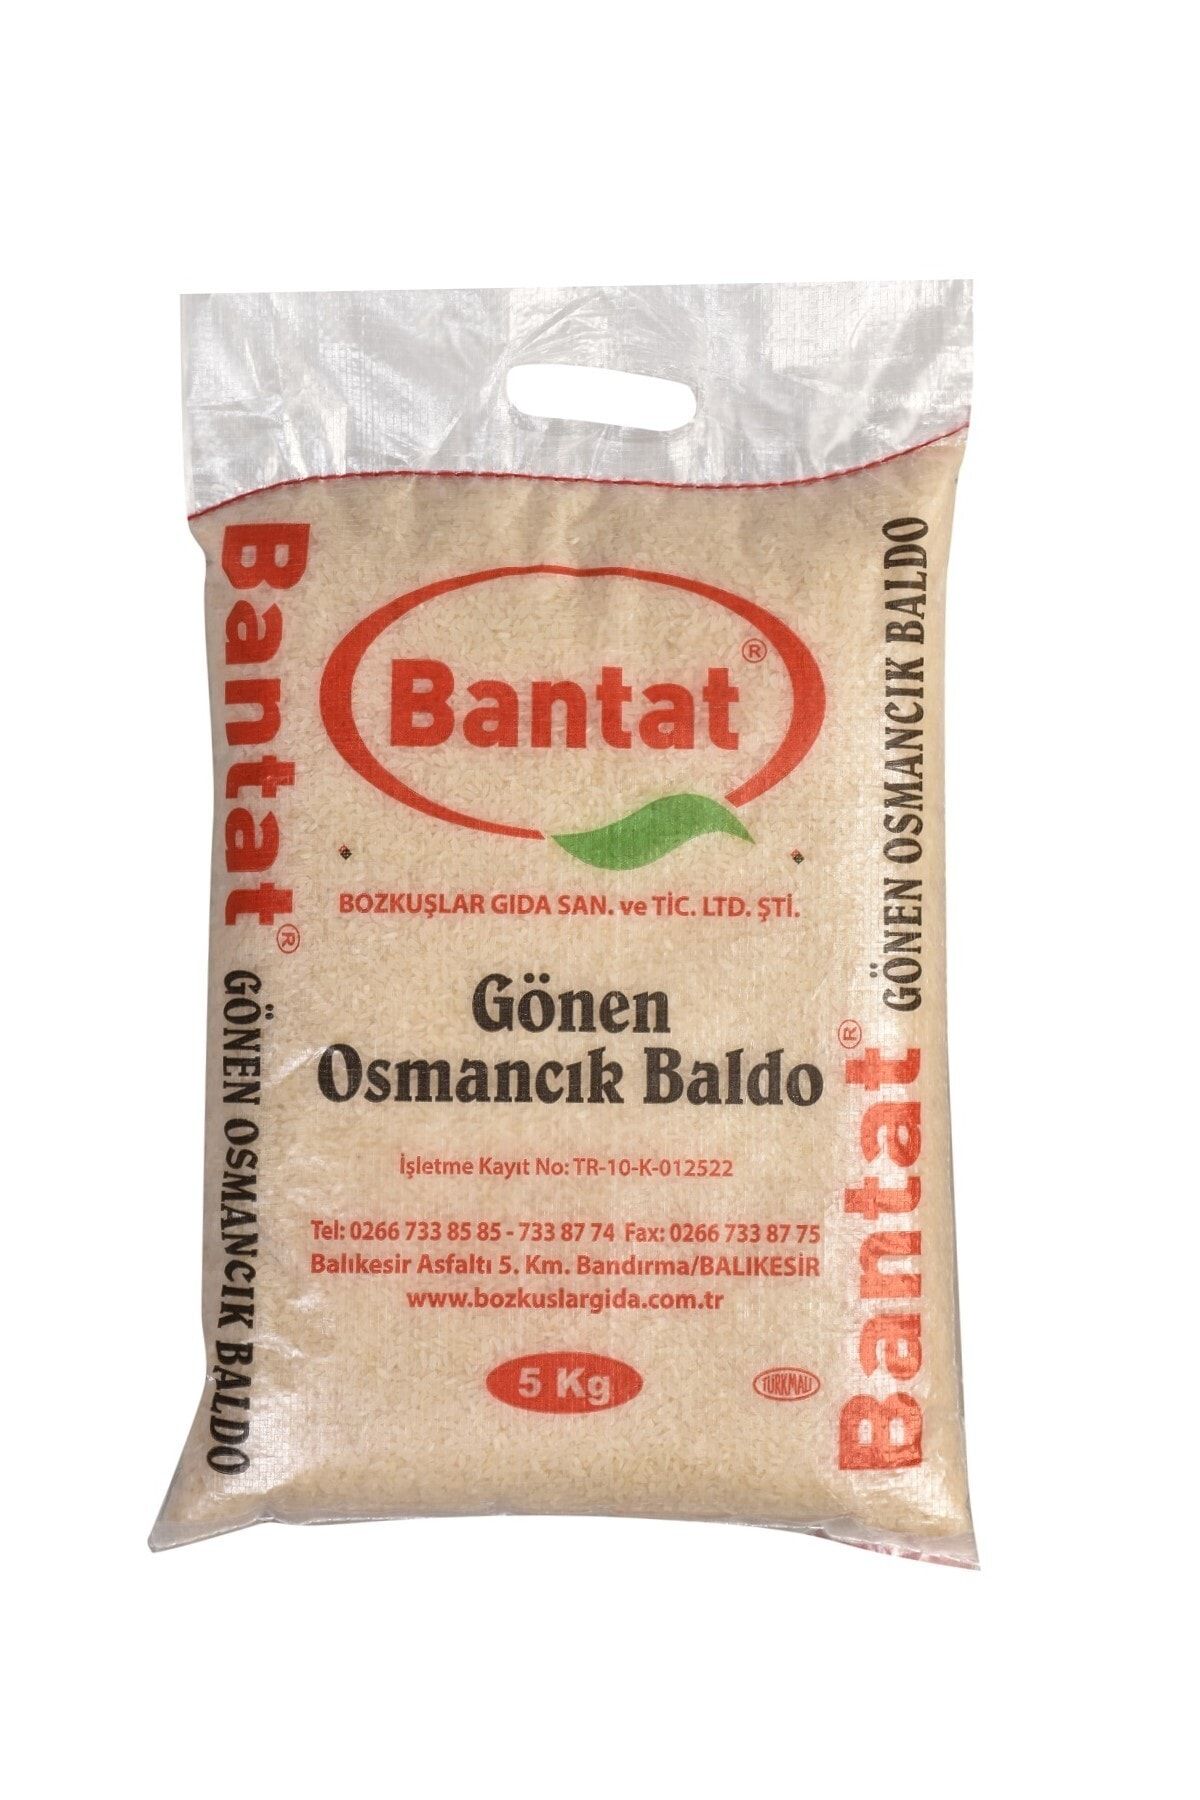 Bantat Osmancık Pirinç 5 Kg (GÖNEN BALDO)